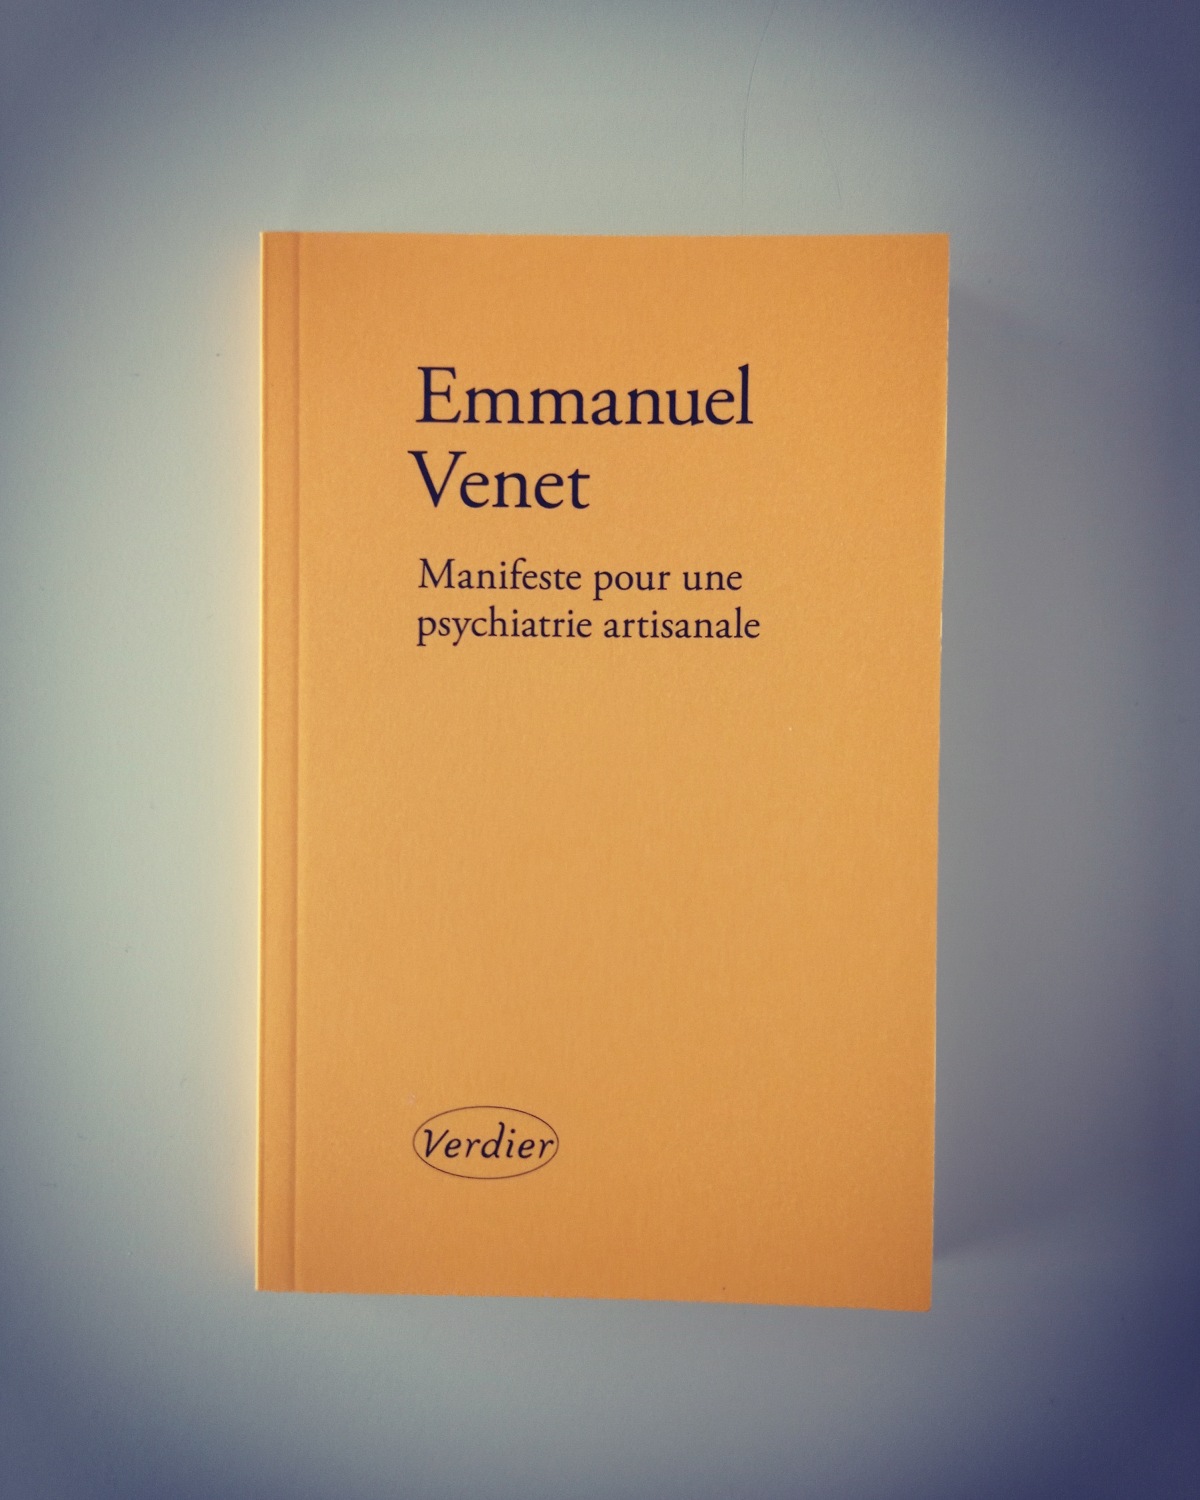 Manifeste pour une psychiatrie artisanale / Emmanuel Venet